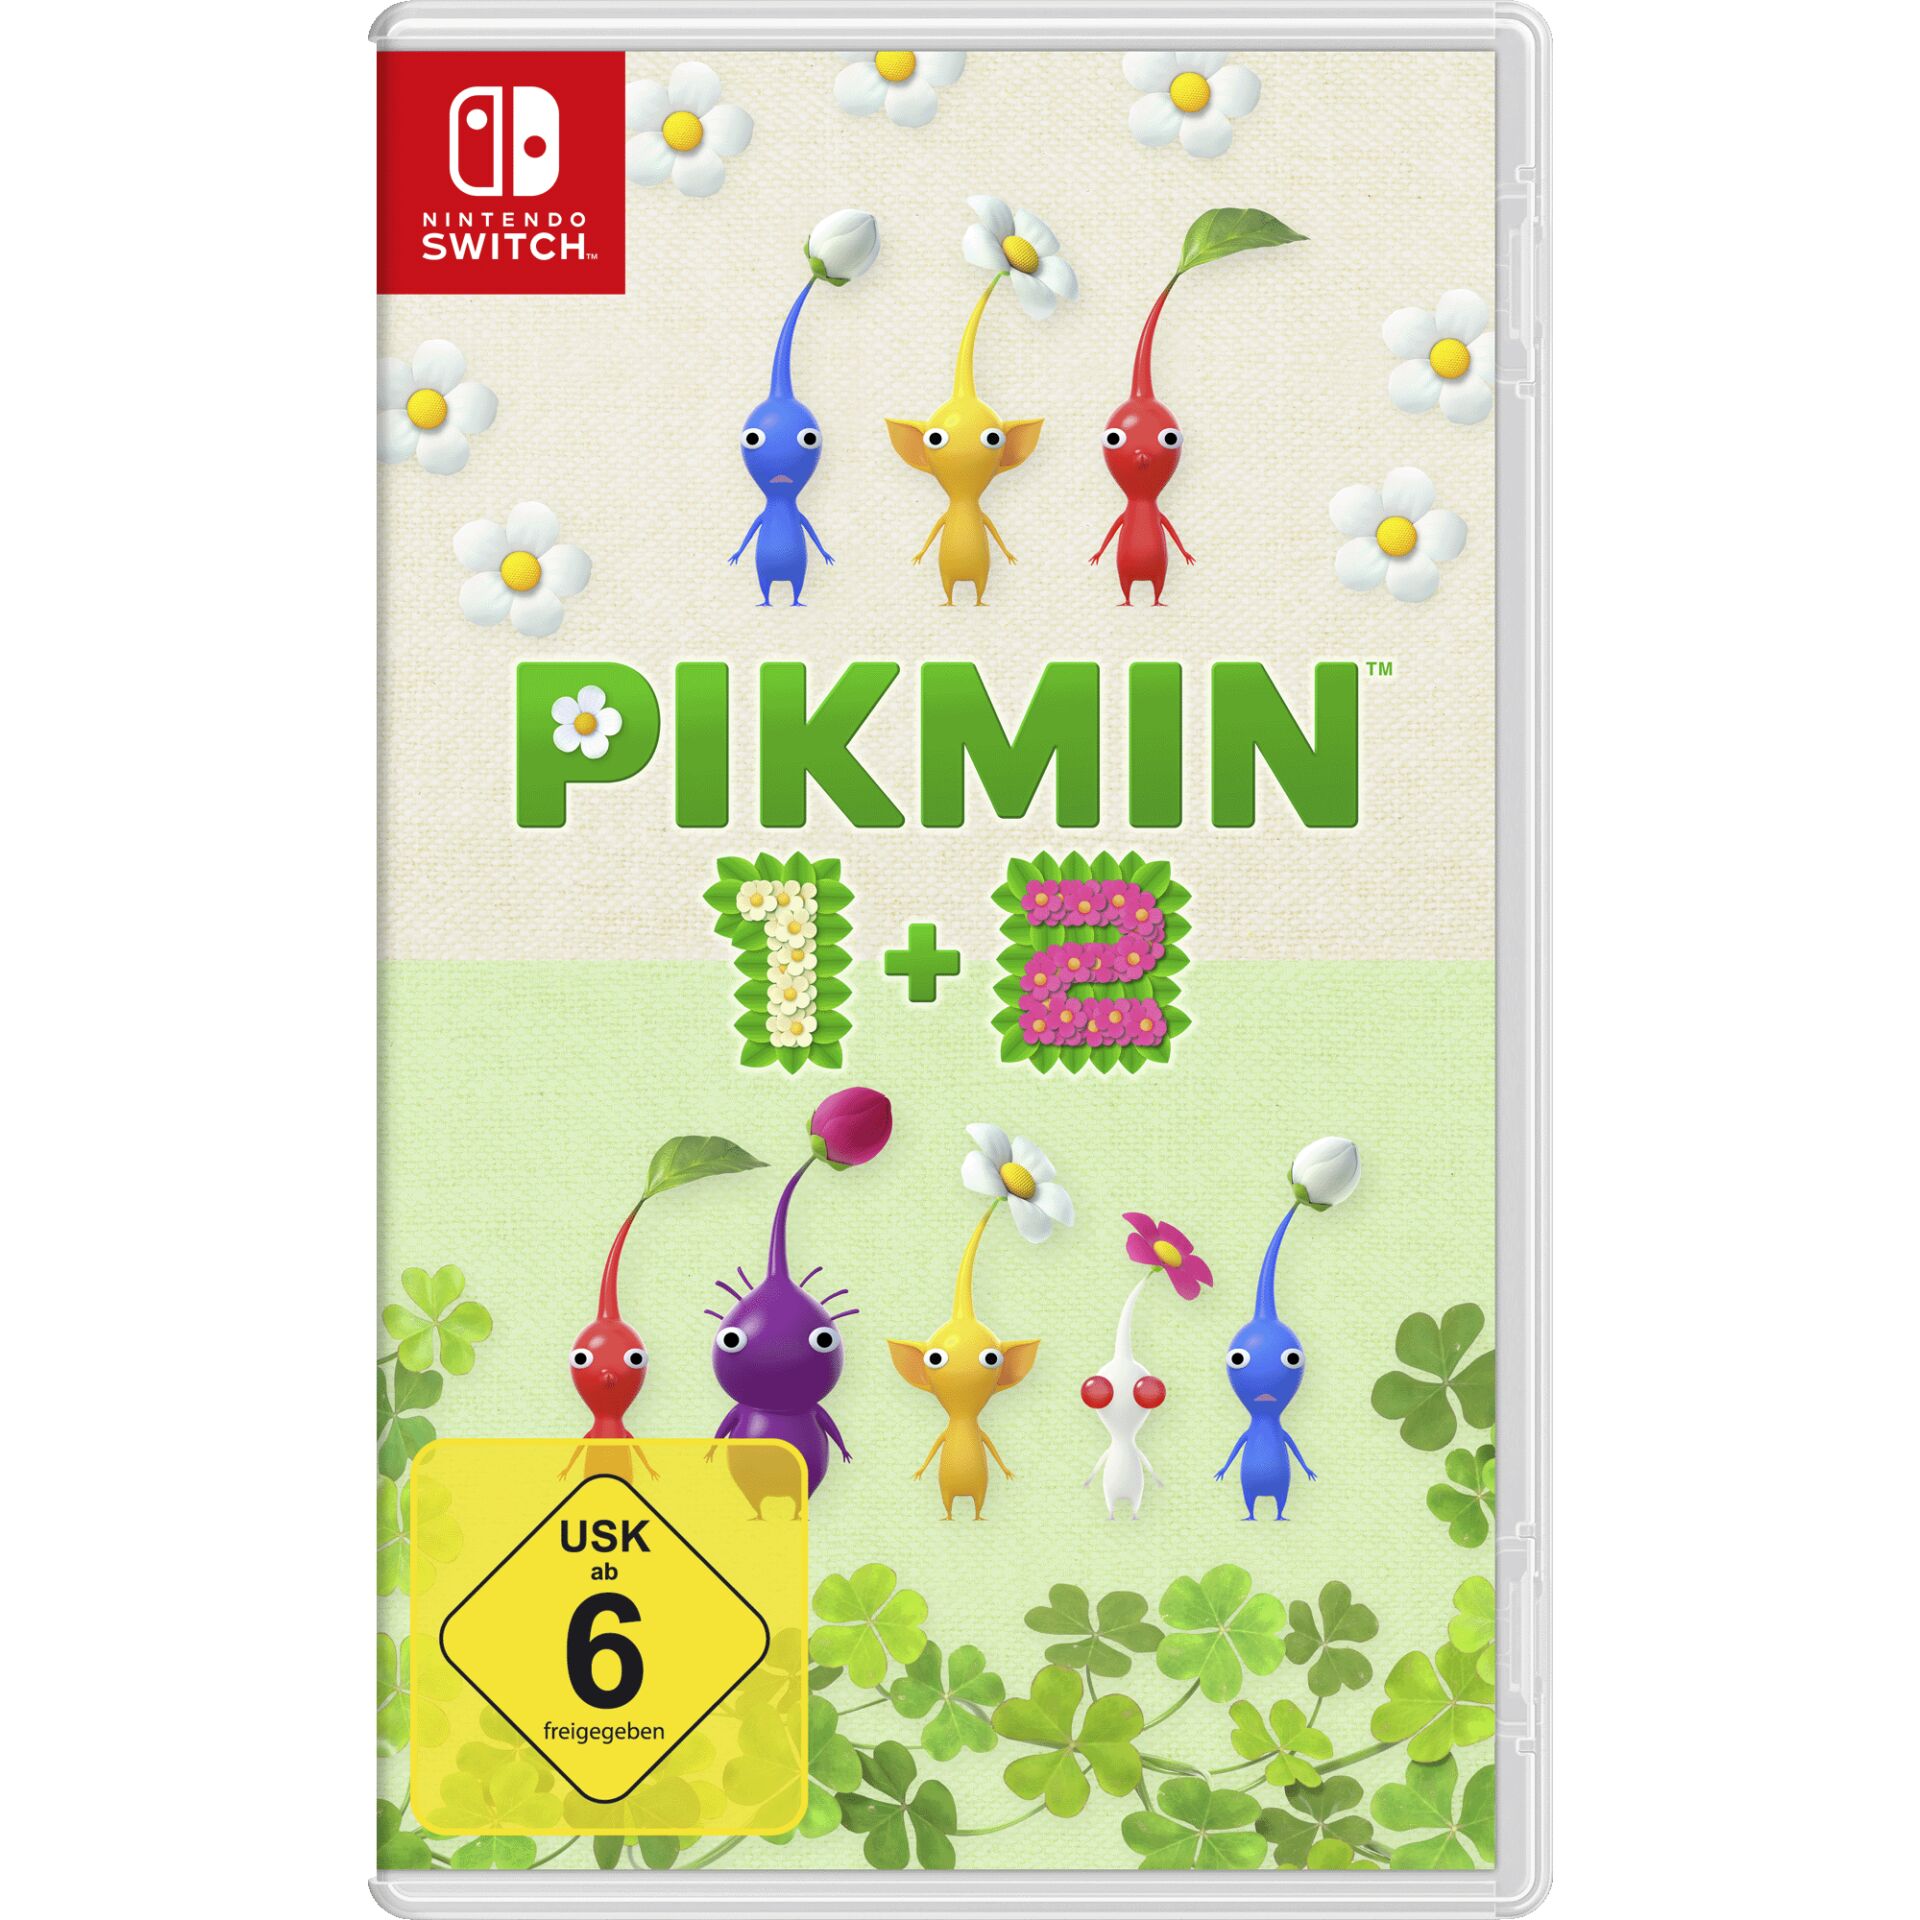 Nintendo Pikmin 1 + 2 Standard German, English, Spanish, French, Italian, Japanese Nintendo Switch